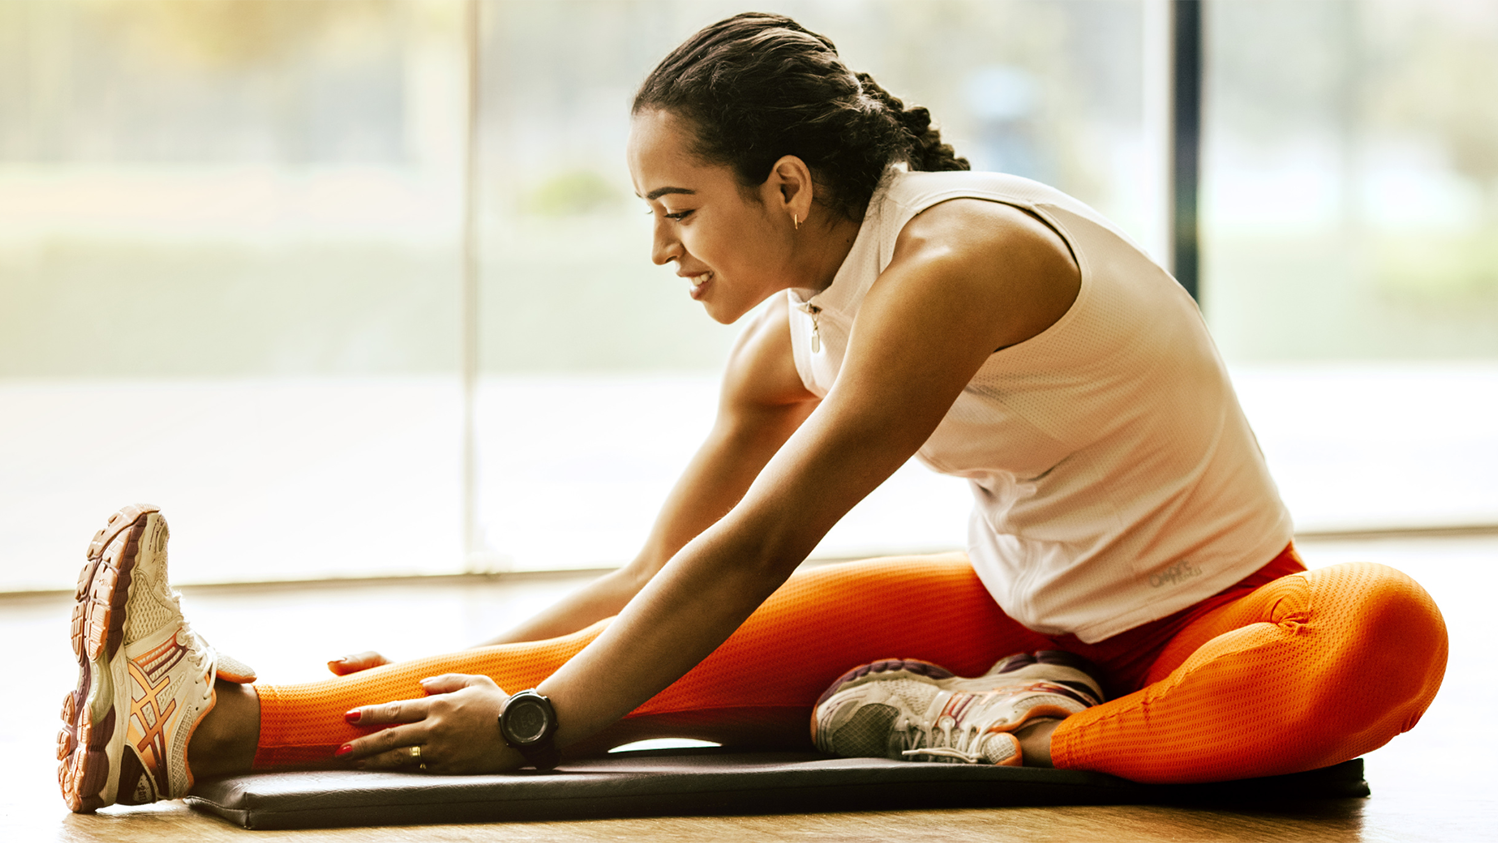 A women stretches her legs on a workout mat.